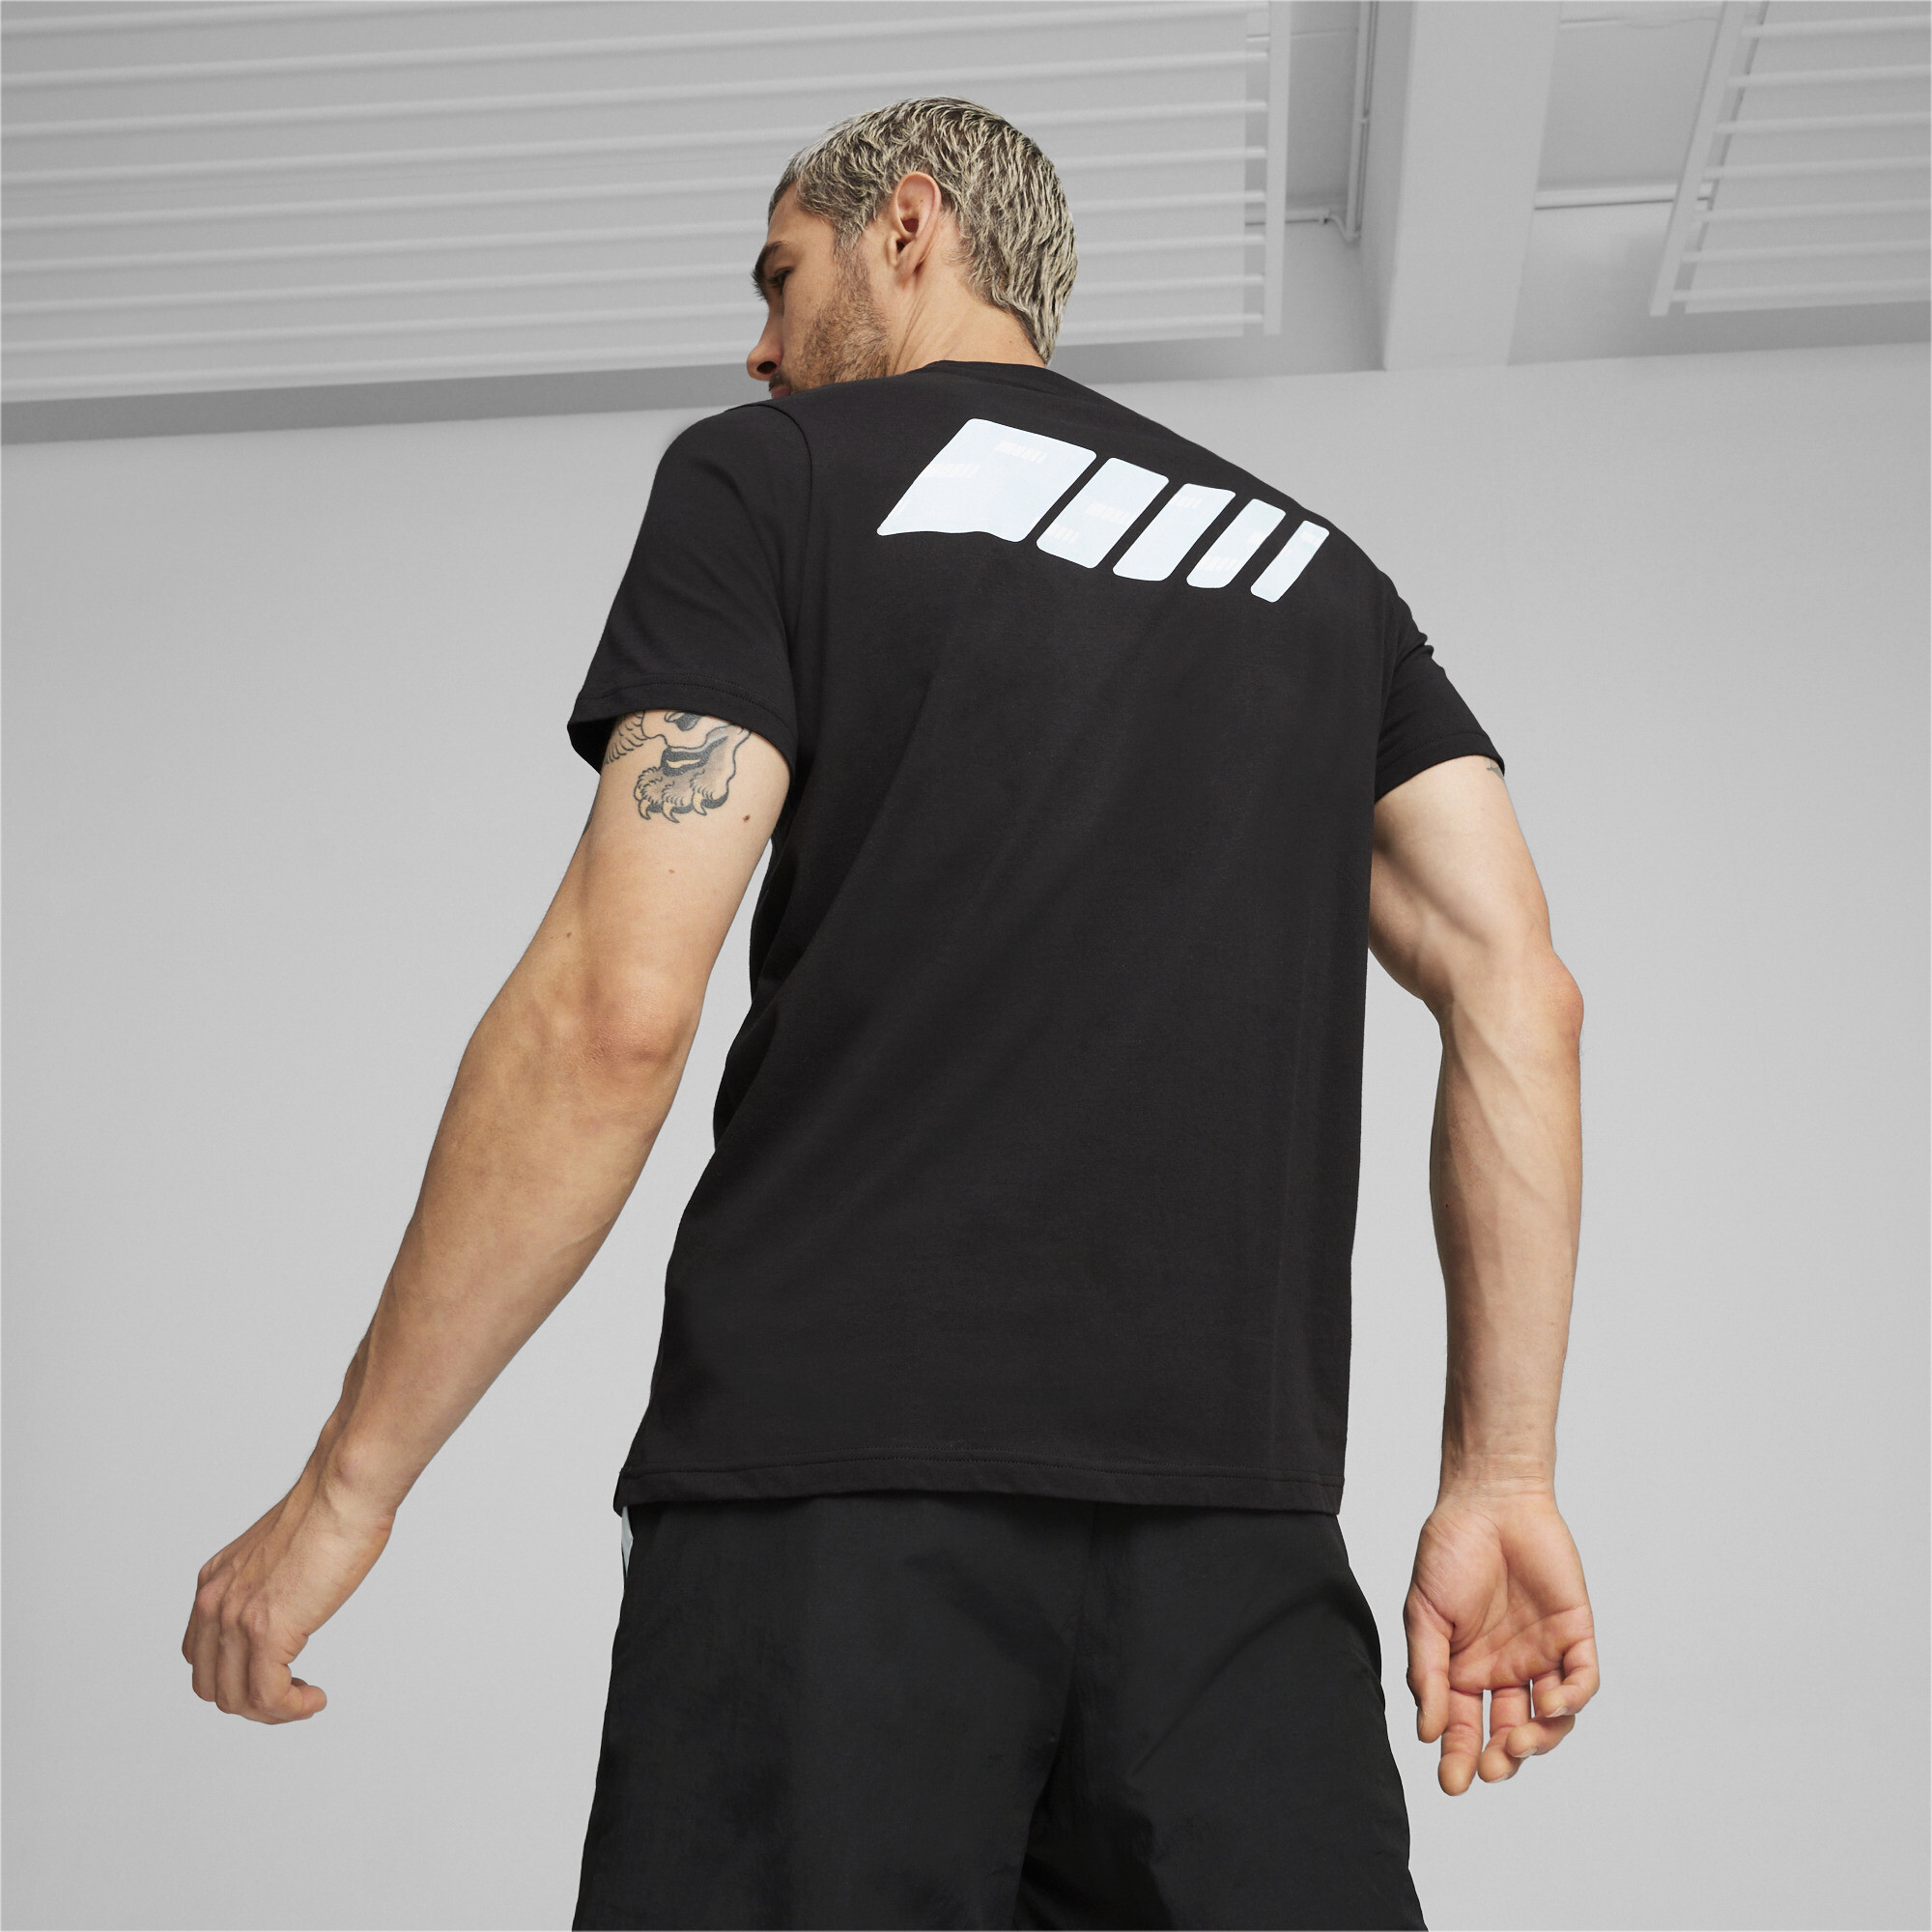 Men's Puma AMG Motorsports Graphic T-Shirt, Black, Size M, Clothing